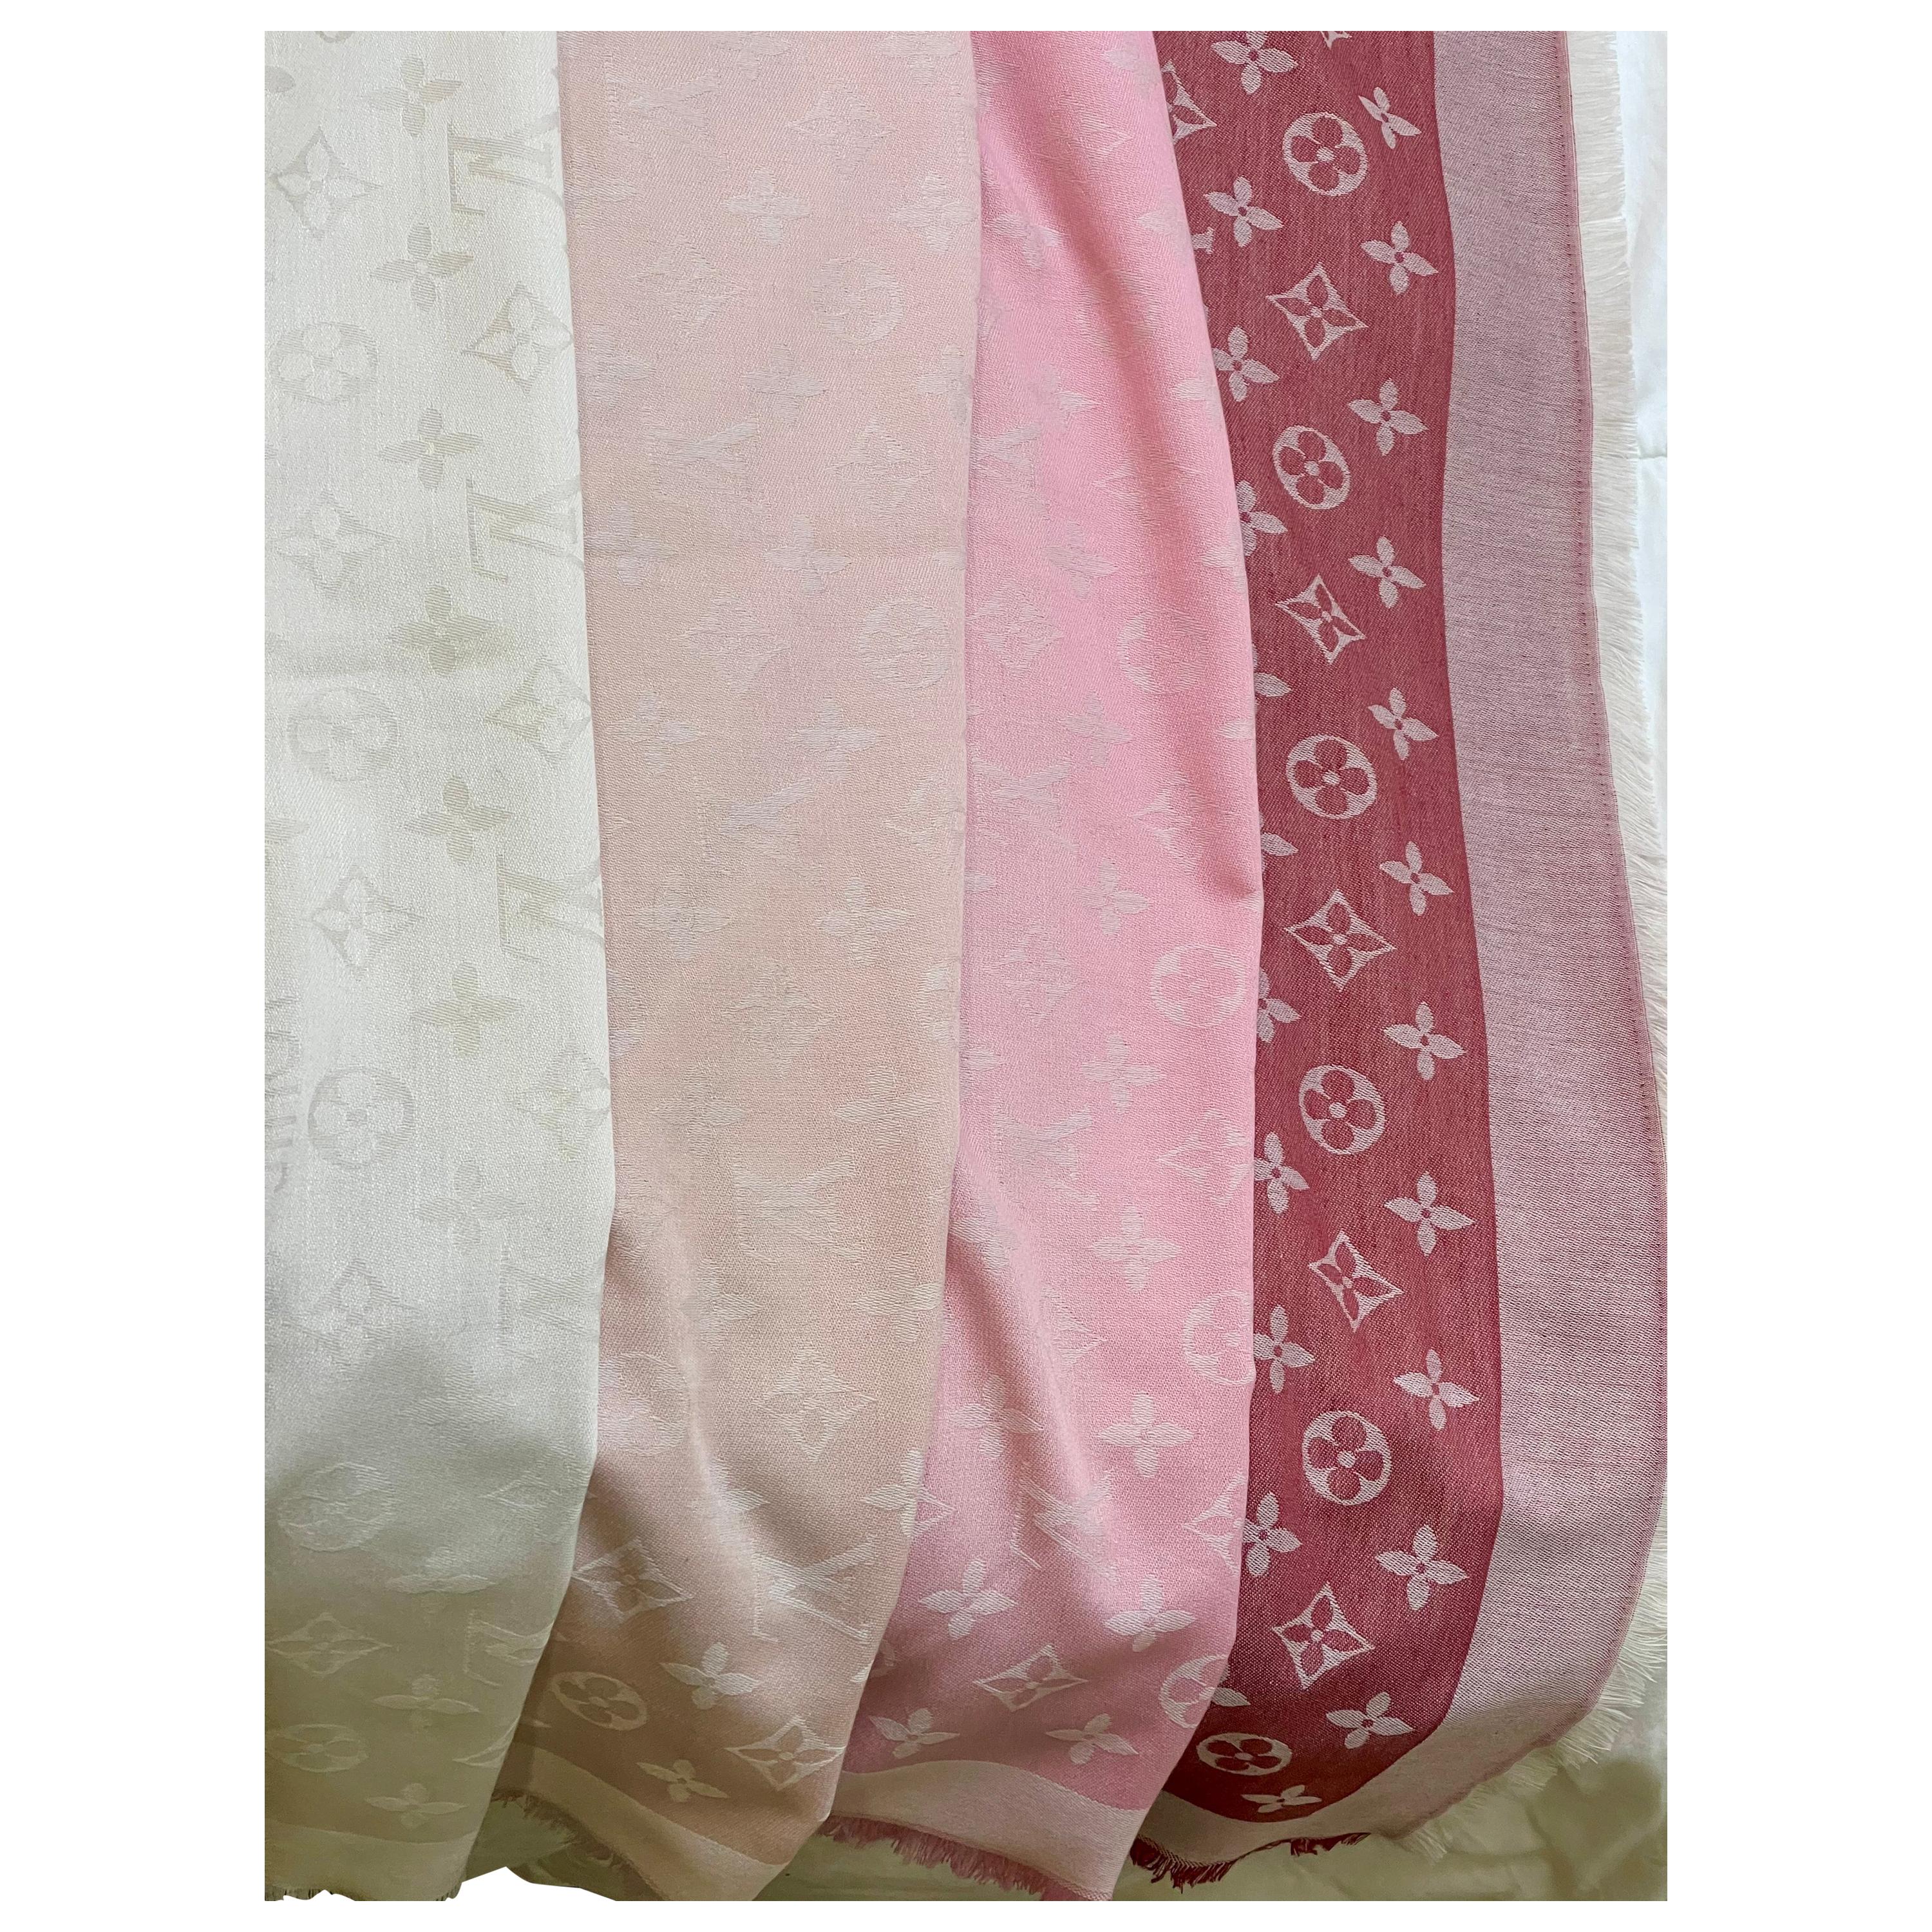 LOUIS VUITTON Authentic Pink Monogram Logo Cashmere Pashmina Scarf Shawl  Wrap